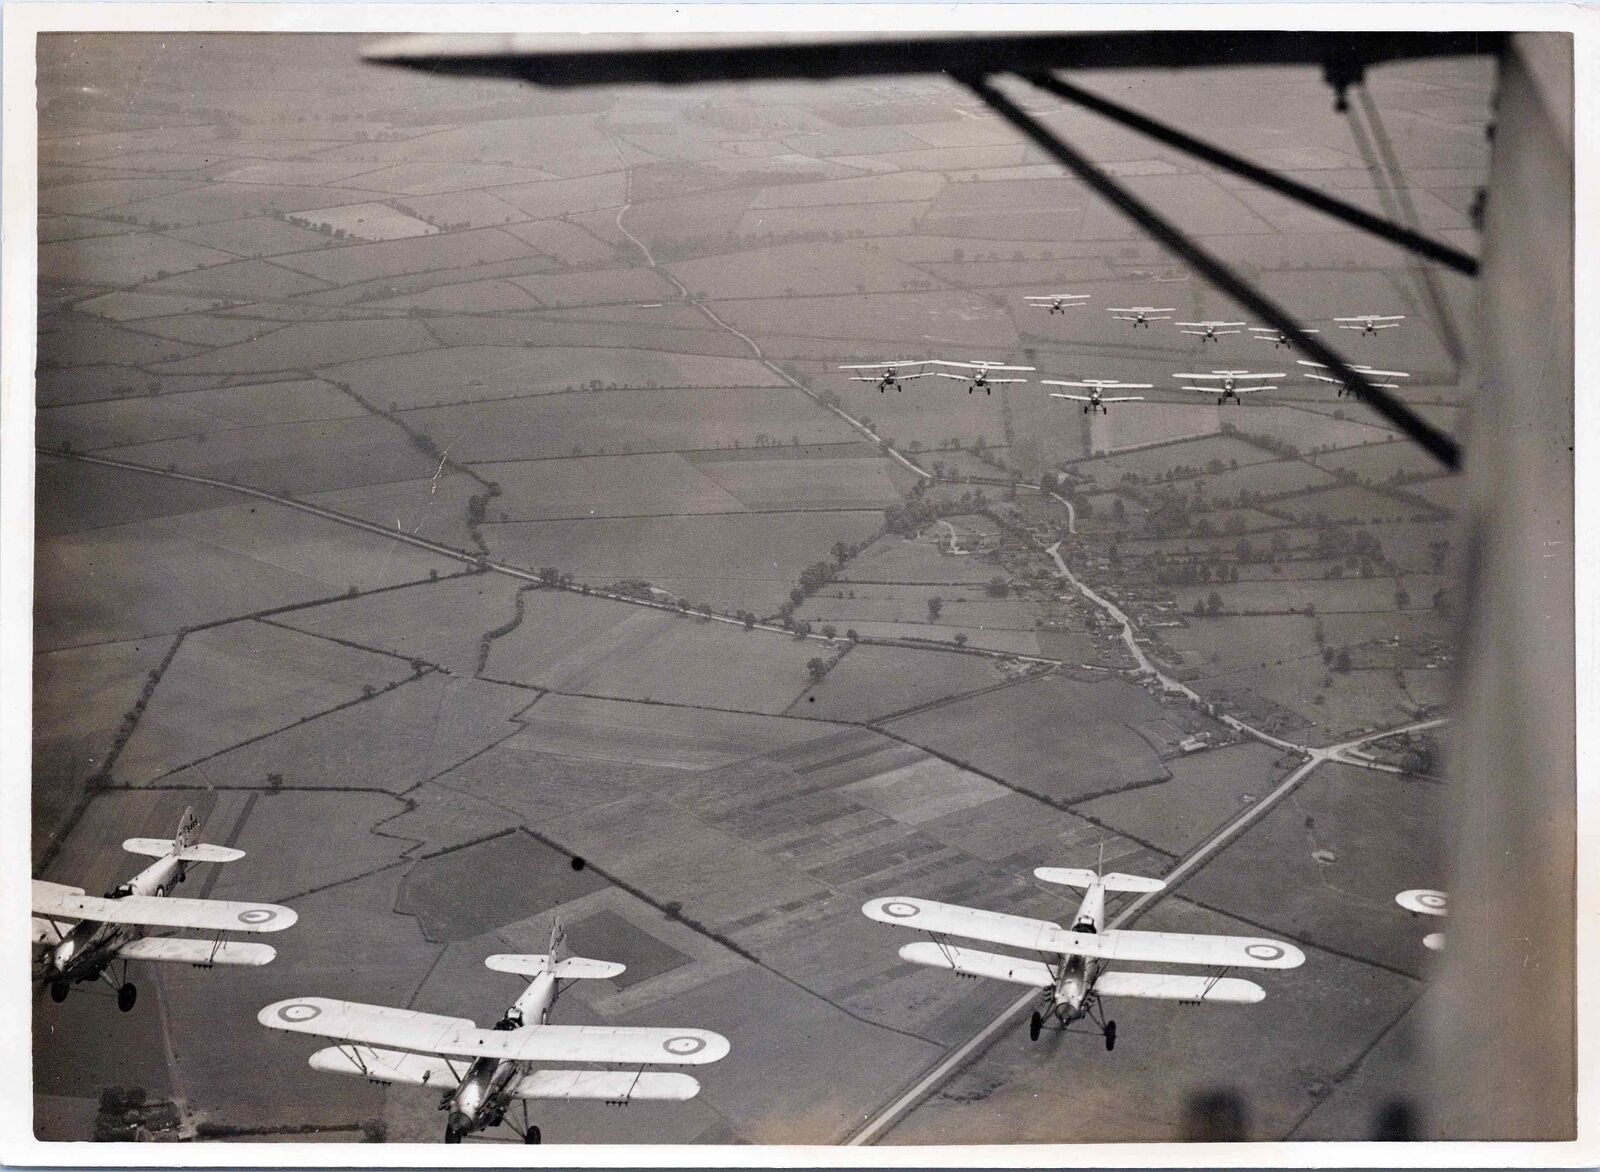 HAWKER DEMON FORMATION VINTAGE ORIGINAL PRESS PHOTO RAF ROYAL AIR FORCE 1